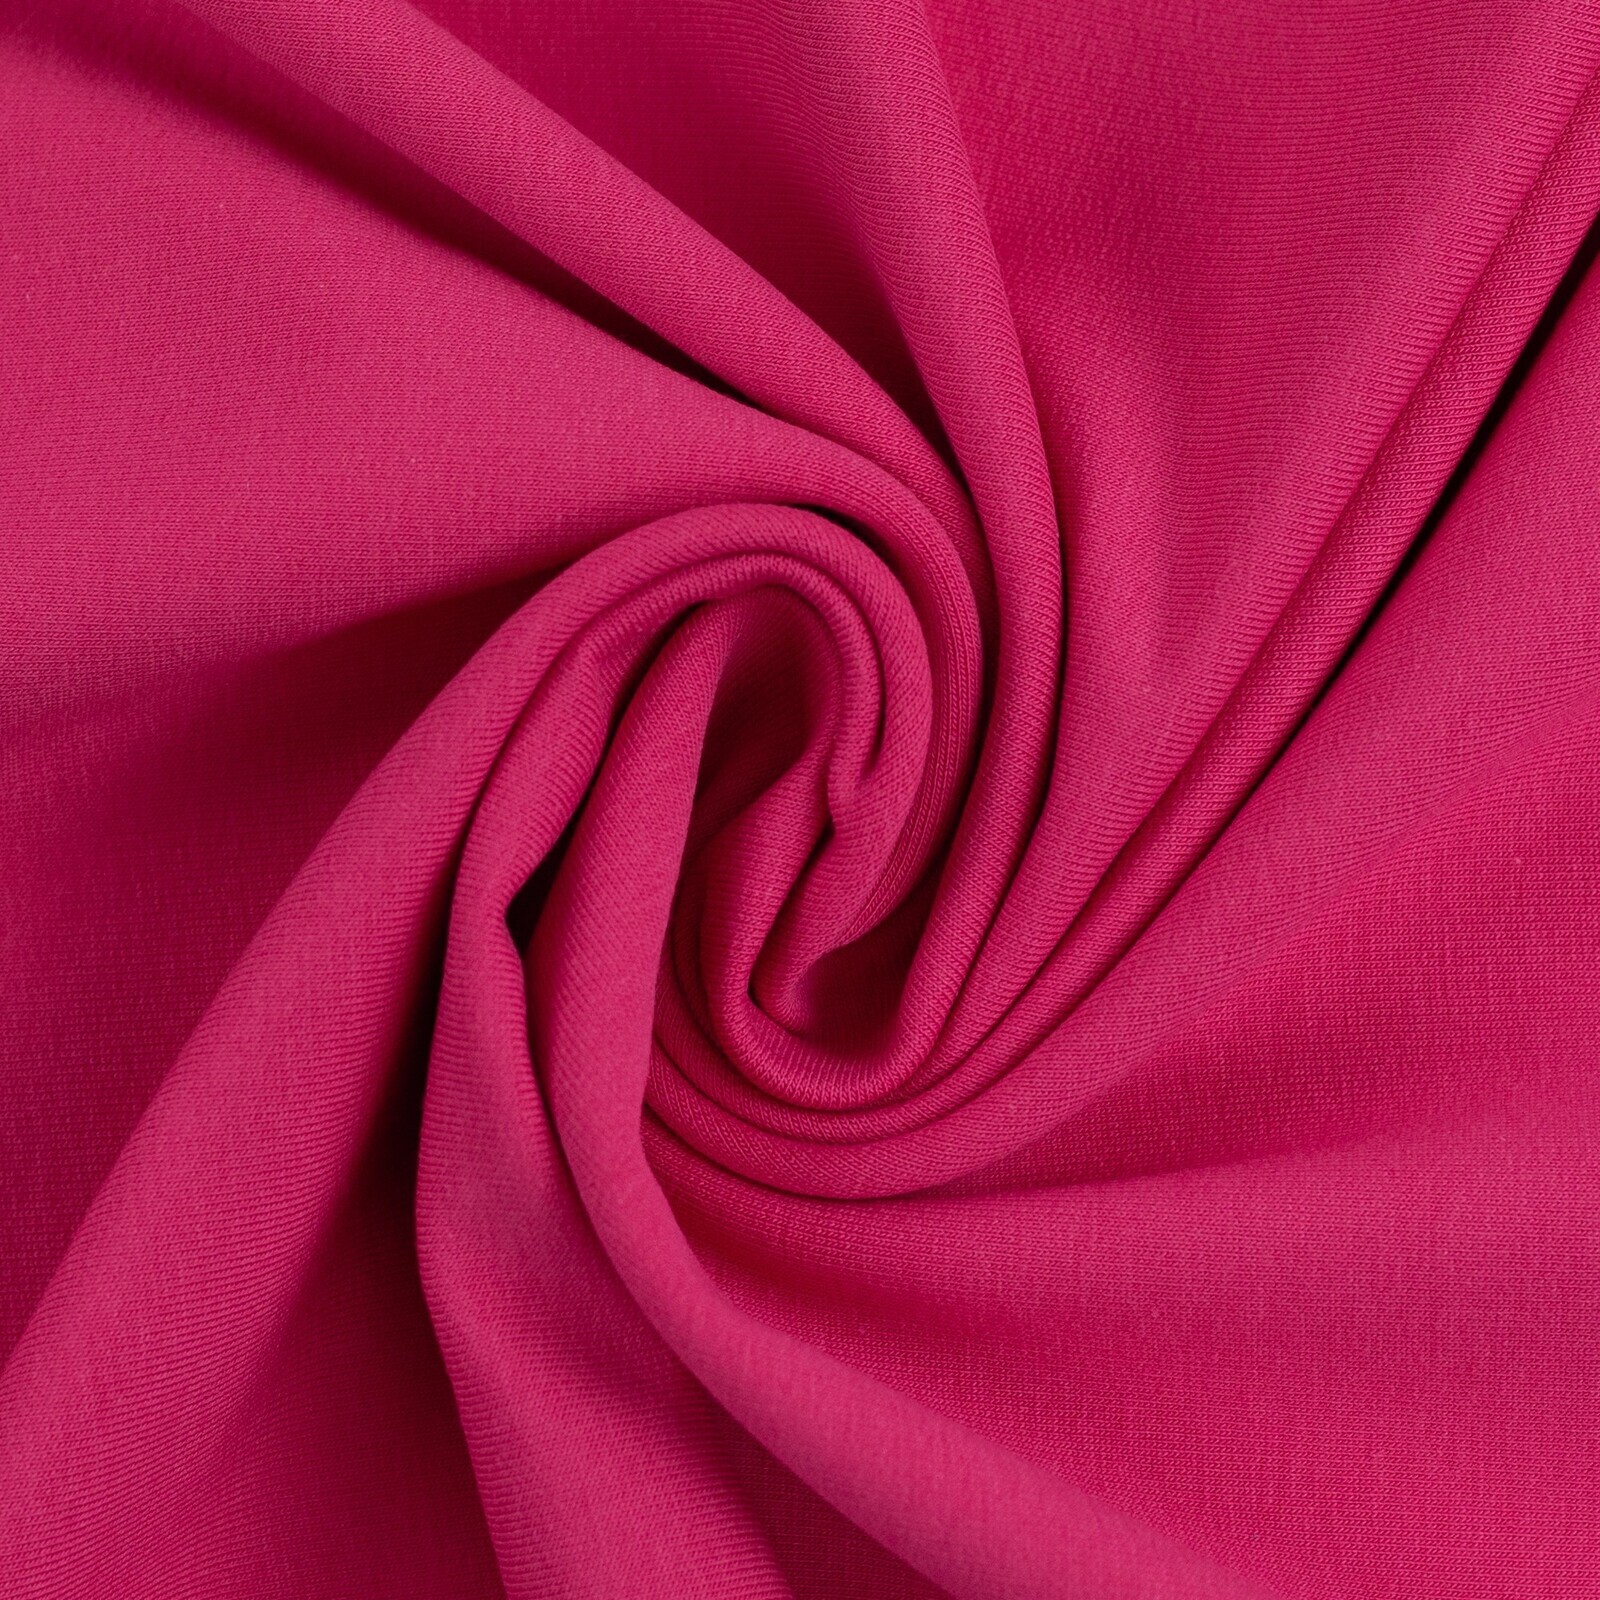 European Cotton Elastane Lycra Jersey, Solid Bright Pink Knit Fabric